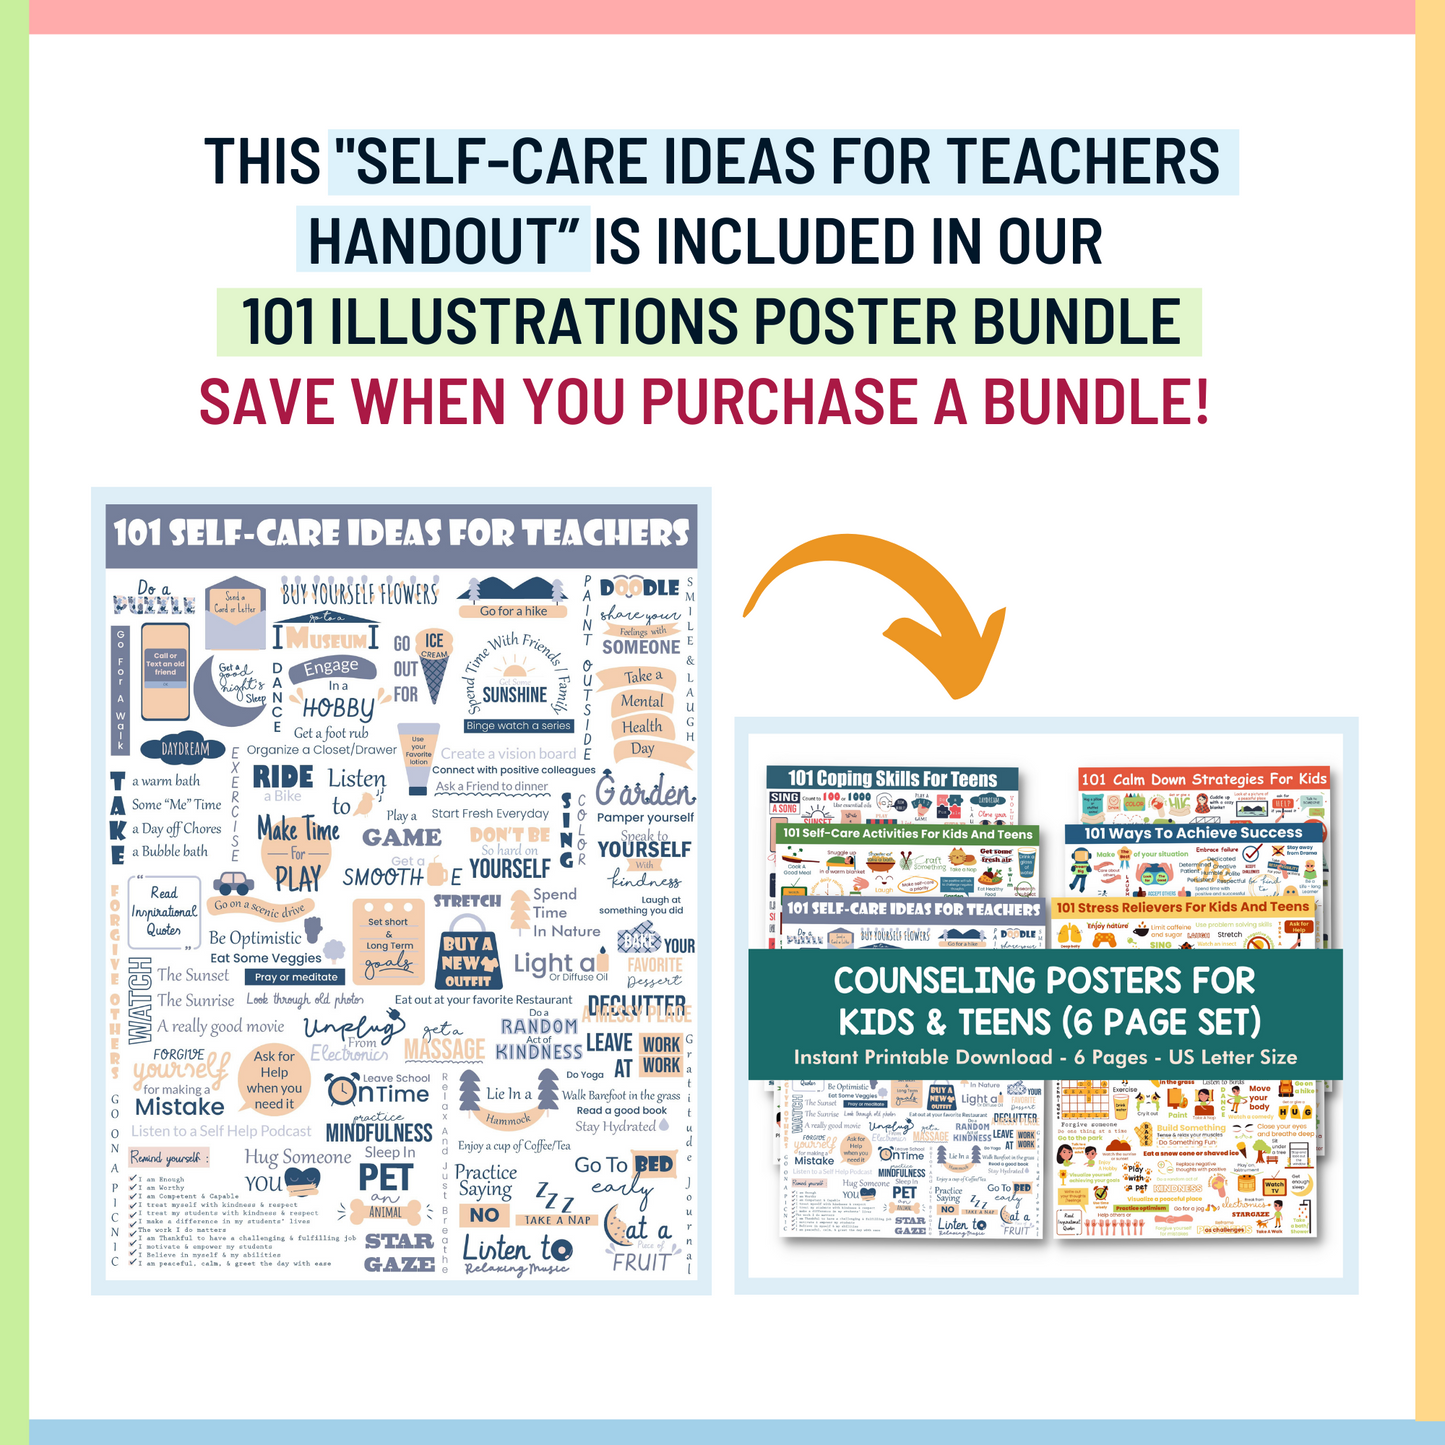 Self-Care Ideas for Teachers